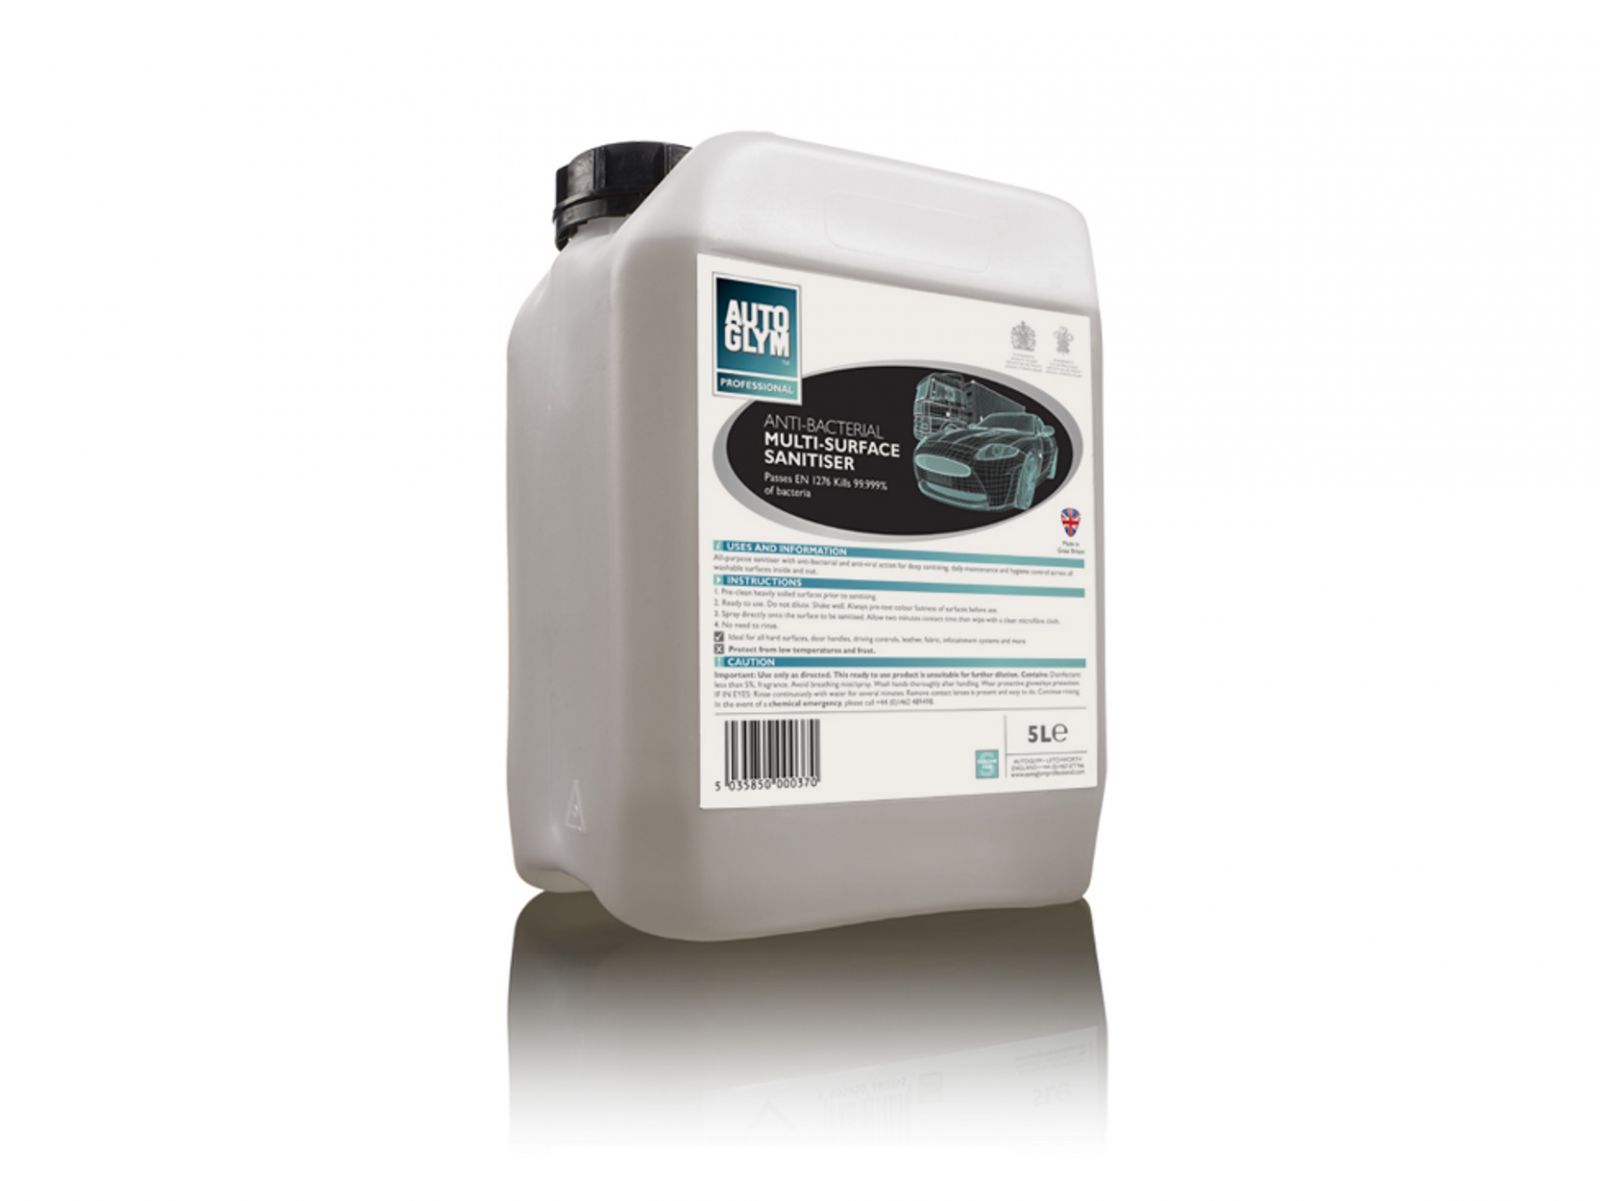 Autoglym Anti-Bacterial Multi-Surface Sanitiser (5L)